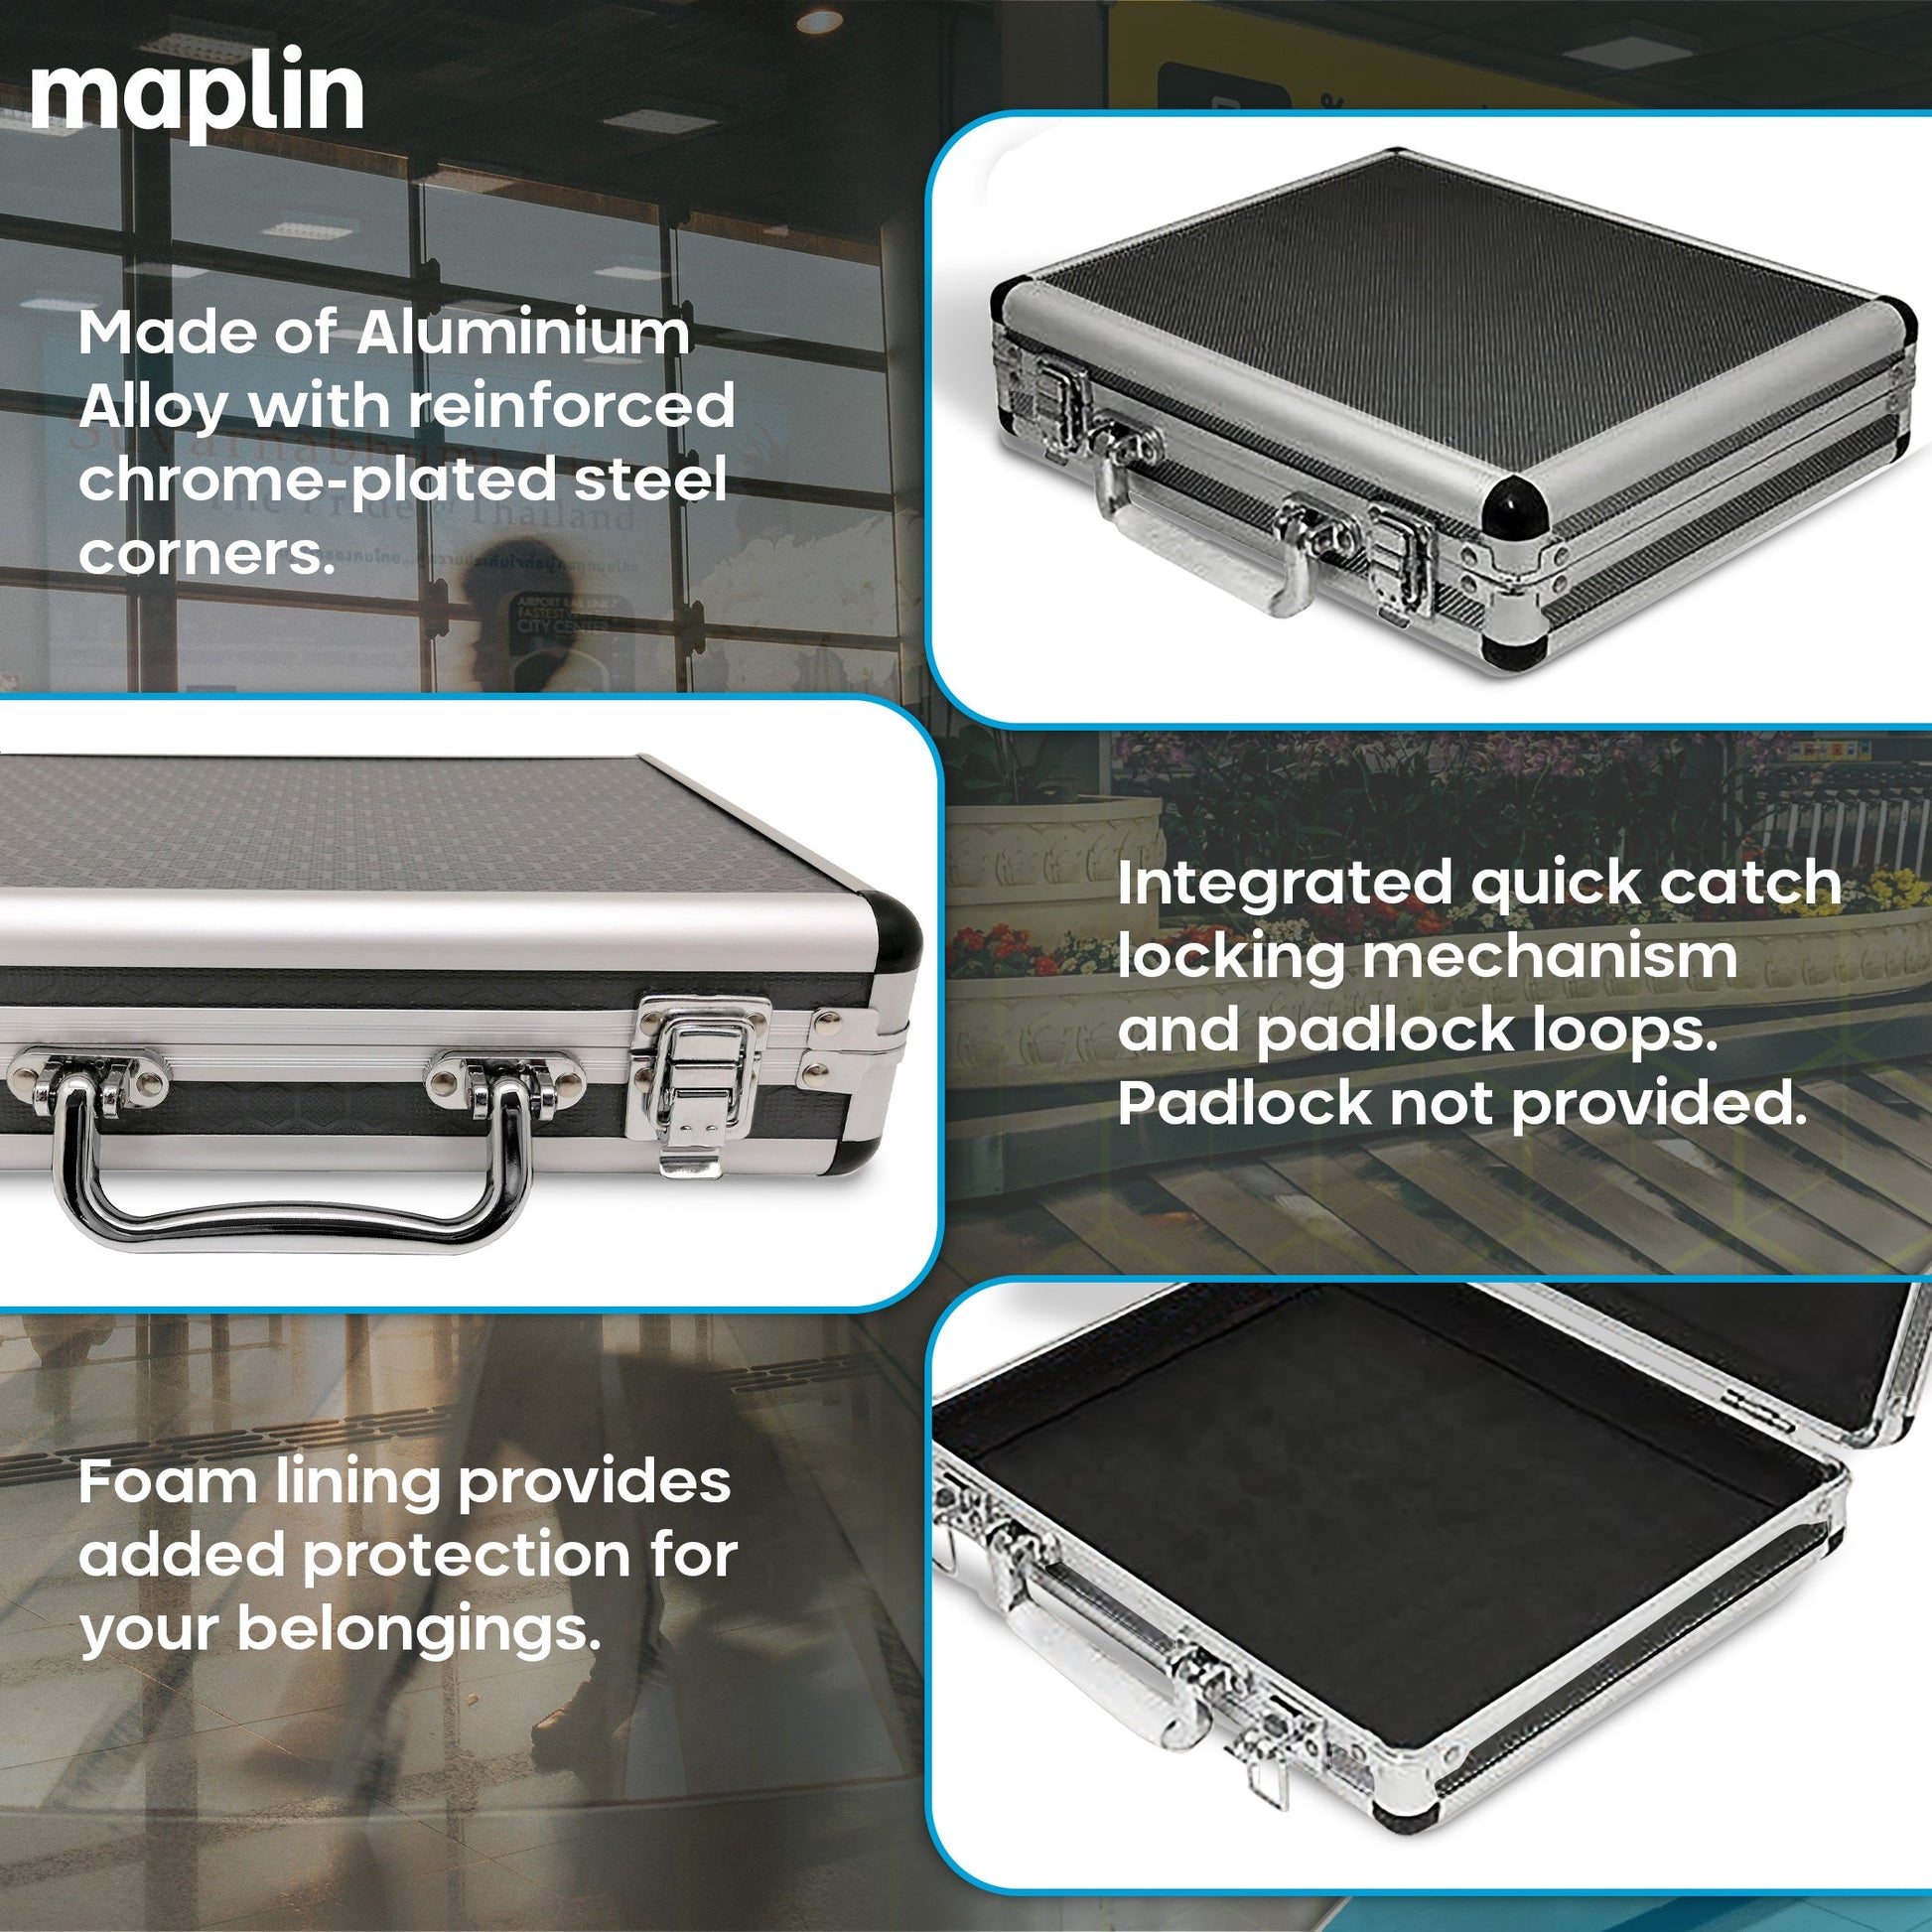 Maplin Aluminium 65 x 280 x 225mm Flight Case - Grey - maplin.co.uk